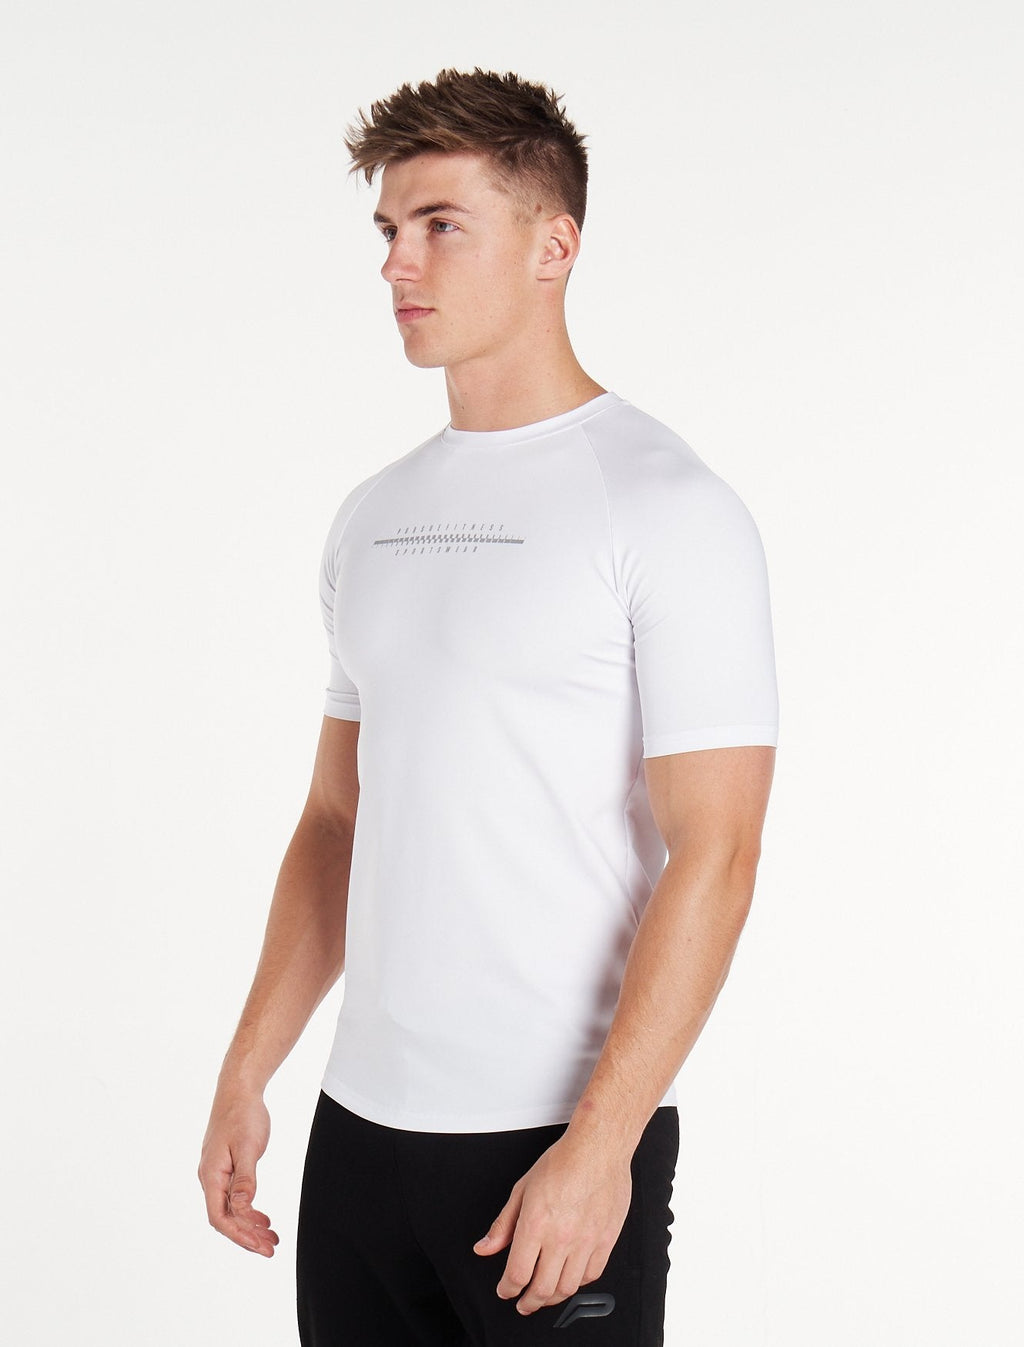 products/mens-breatheasyr-run-faster-t-shirt-white.jpg